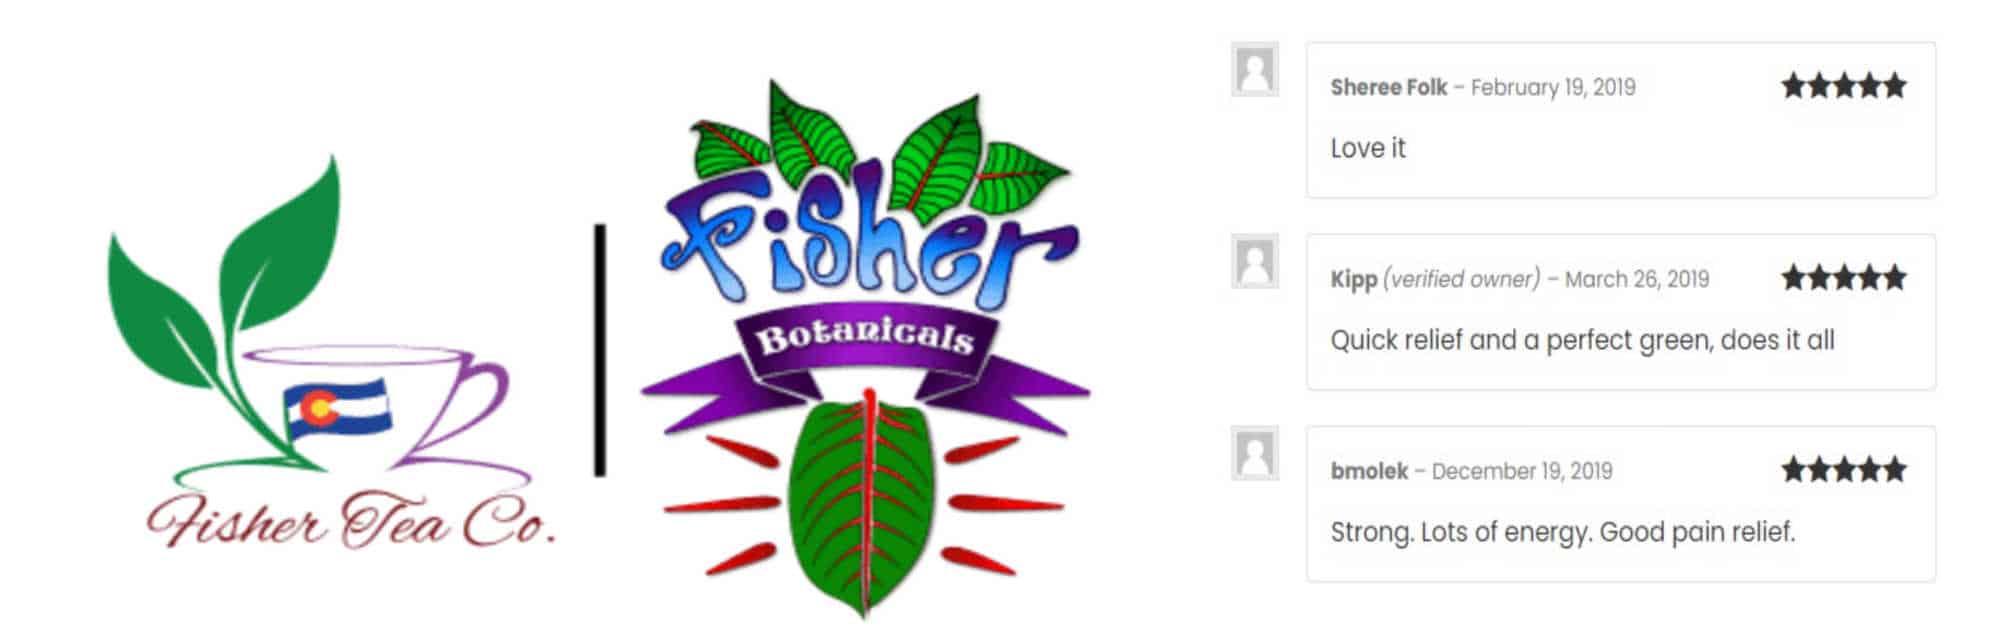 image of fisher botanicals kratom reviews